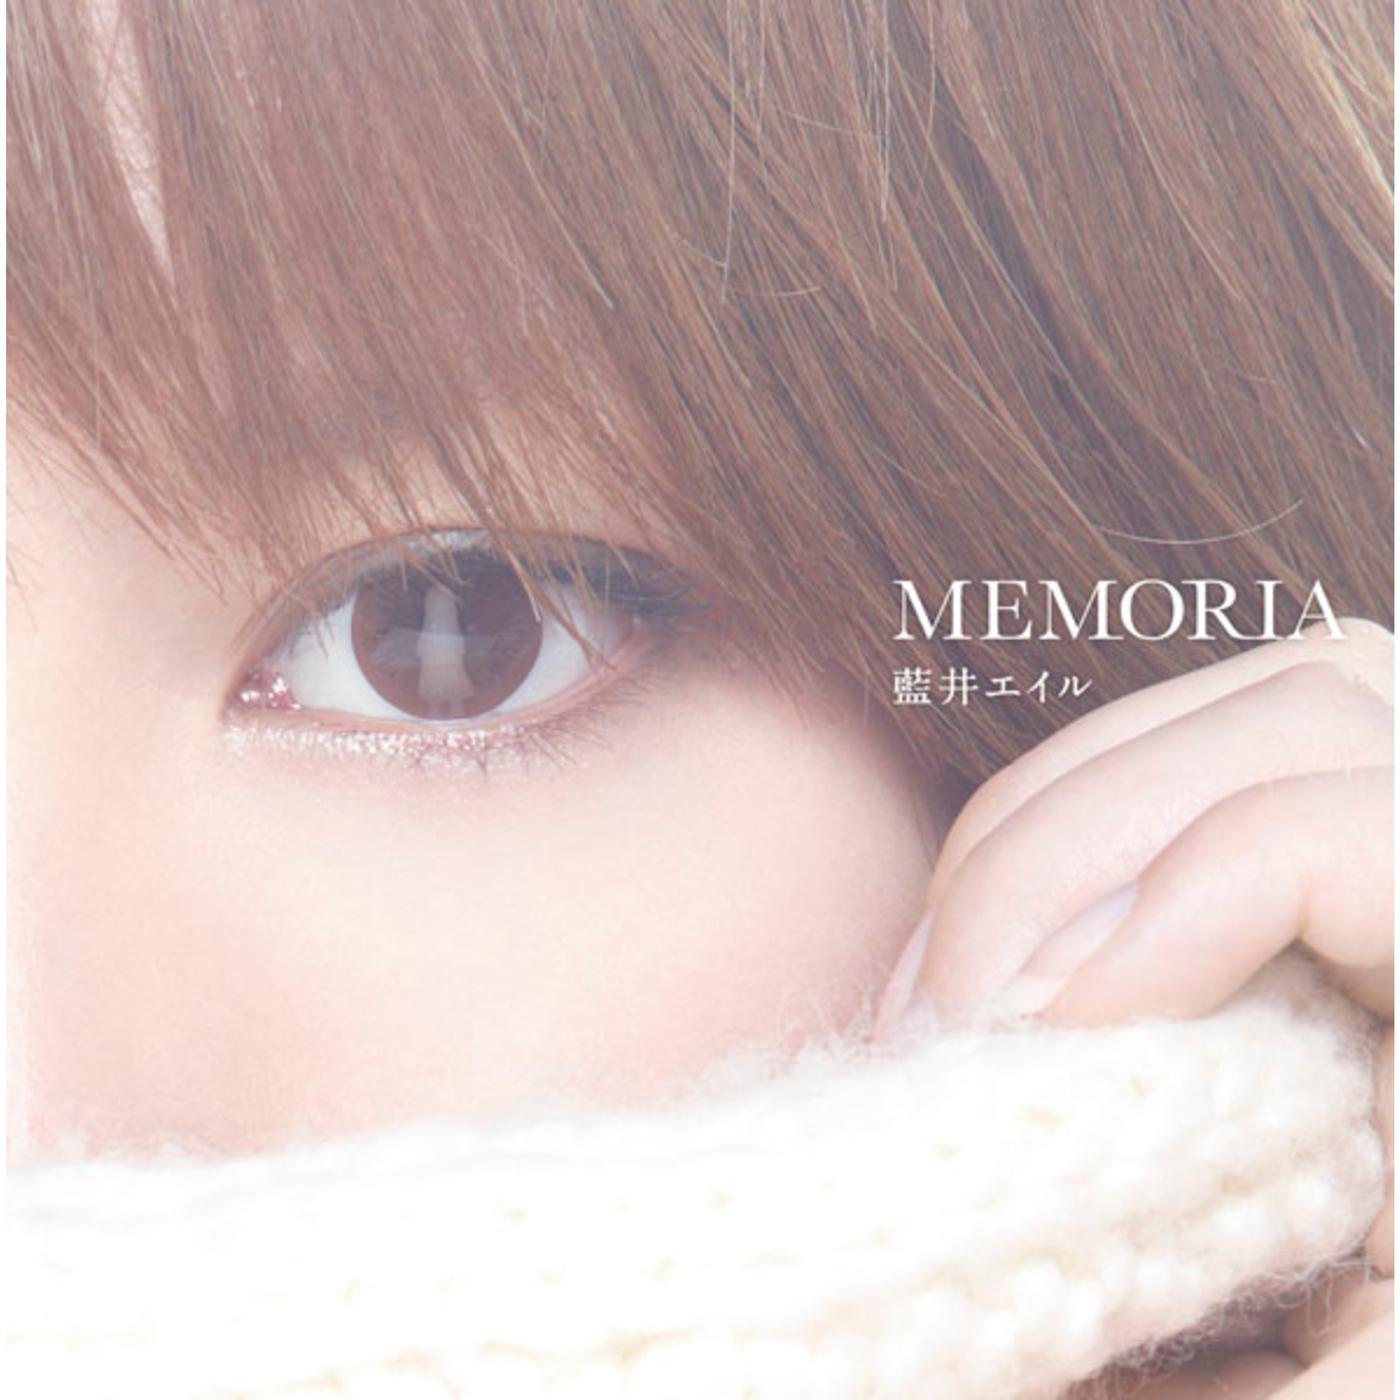 MEMORIA歌词 歌手藍井エイル-专辑MEMORIA-单曲《MEMORIA》LRC歌词下载